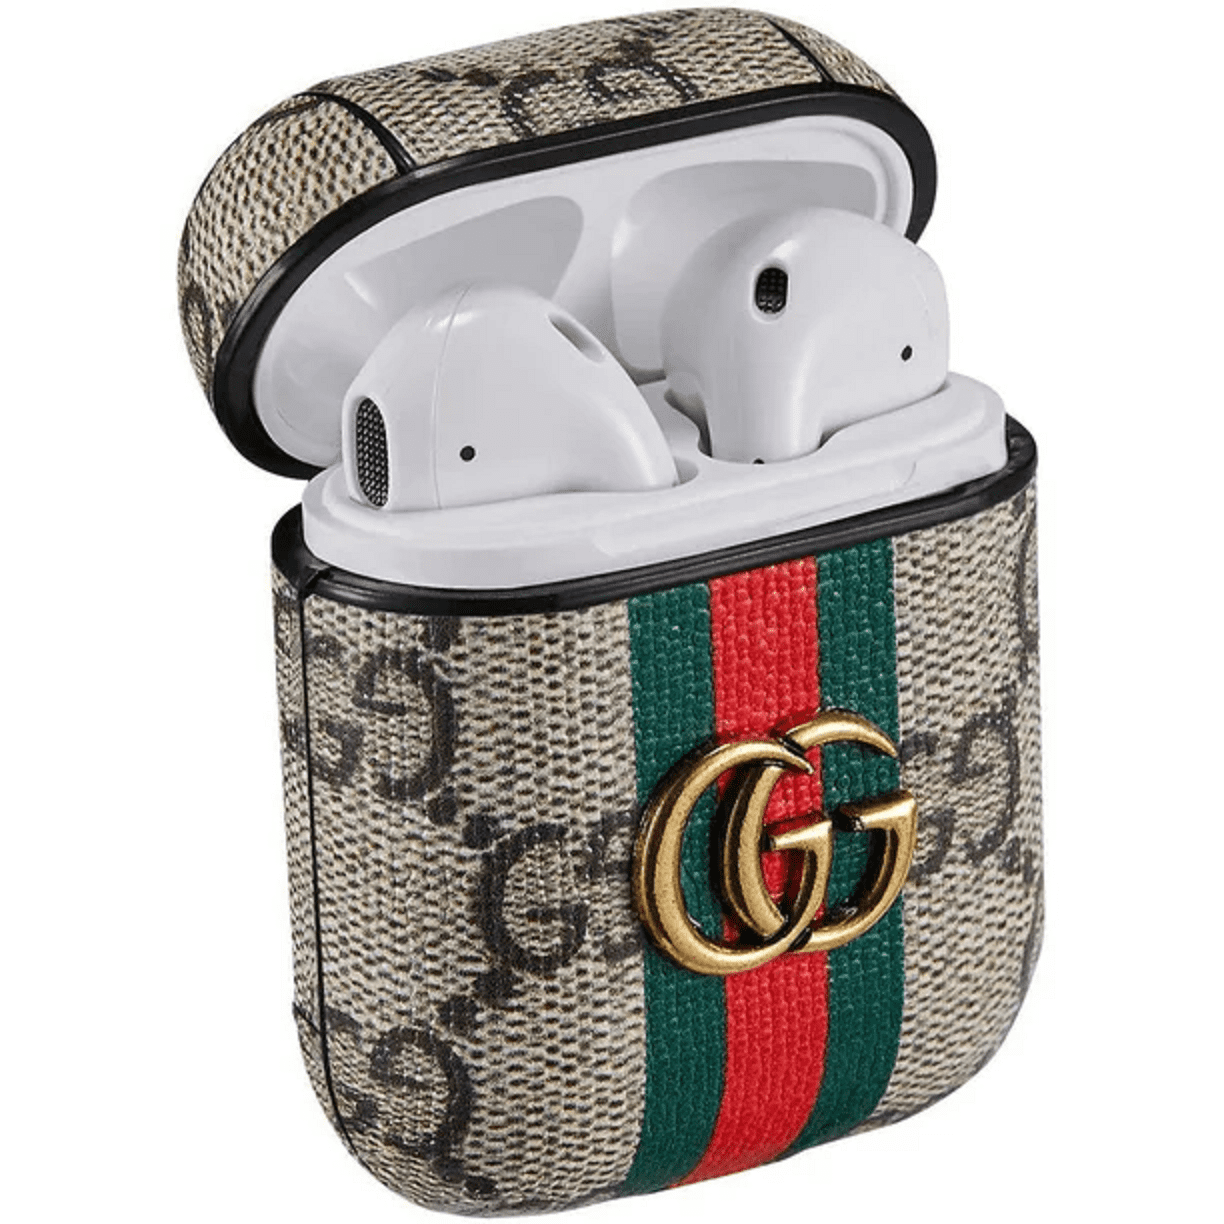 Pastele Gucci Snake Supreme Custom Personalized AirPods Case Apple AirPods  Gen 1 AirPods Gen 2 AirPods